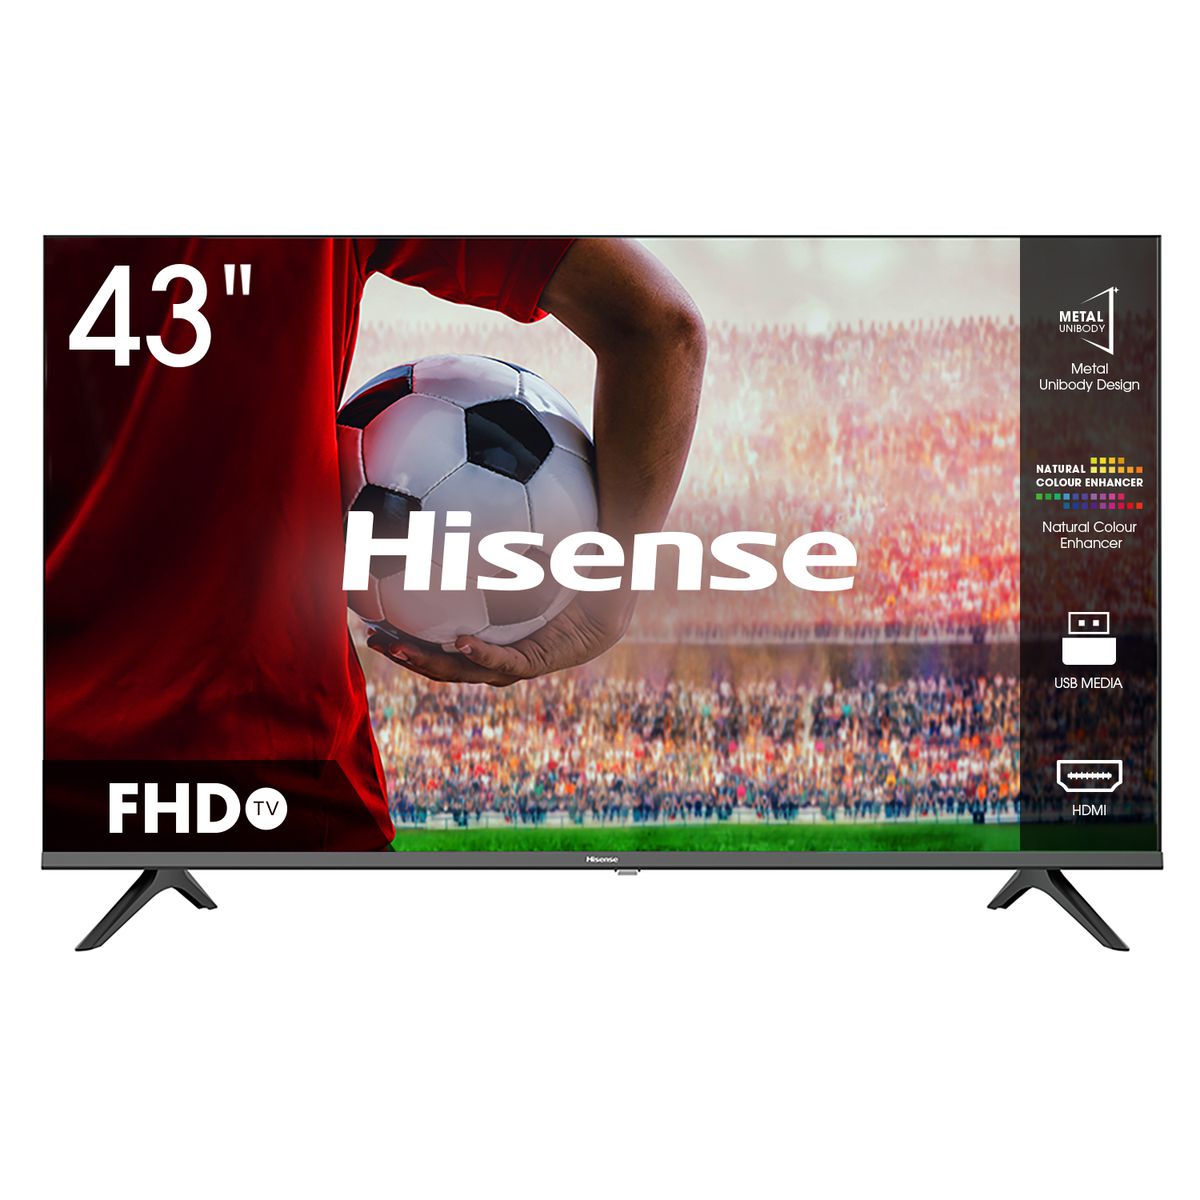 Hisense 43inch Digital TV